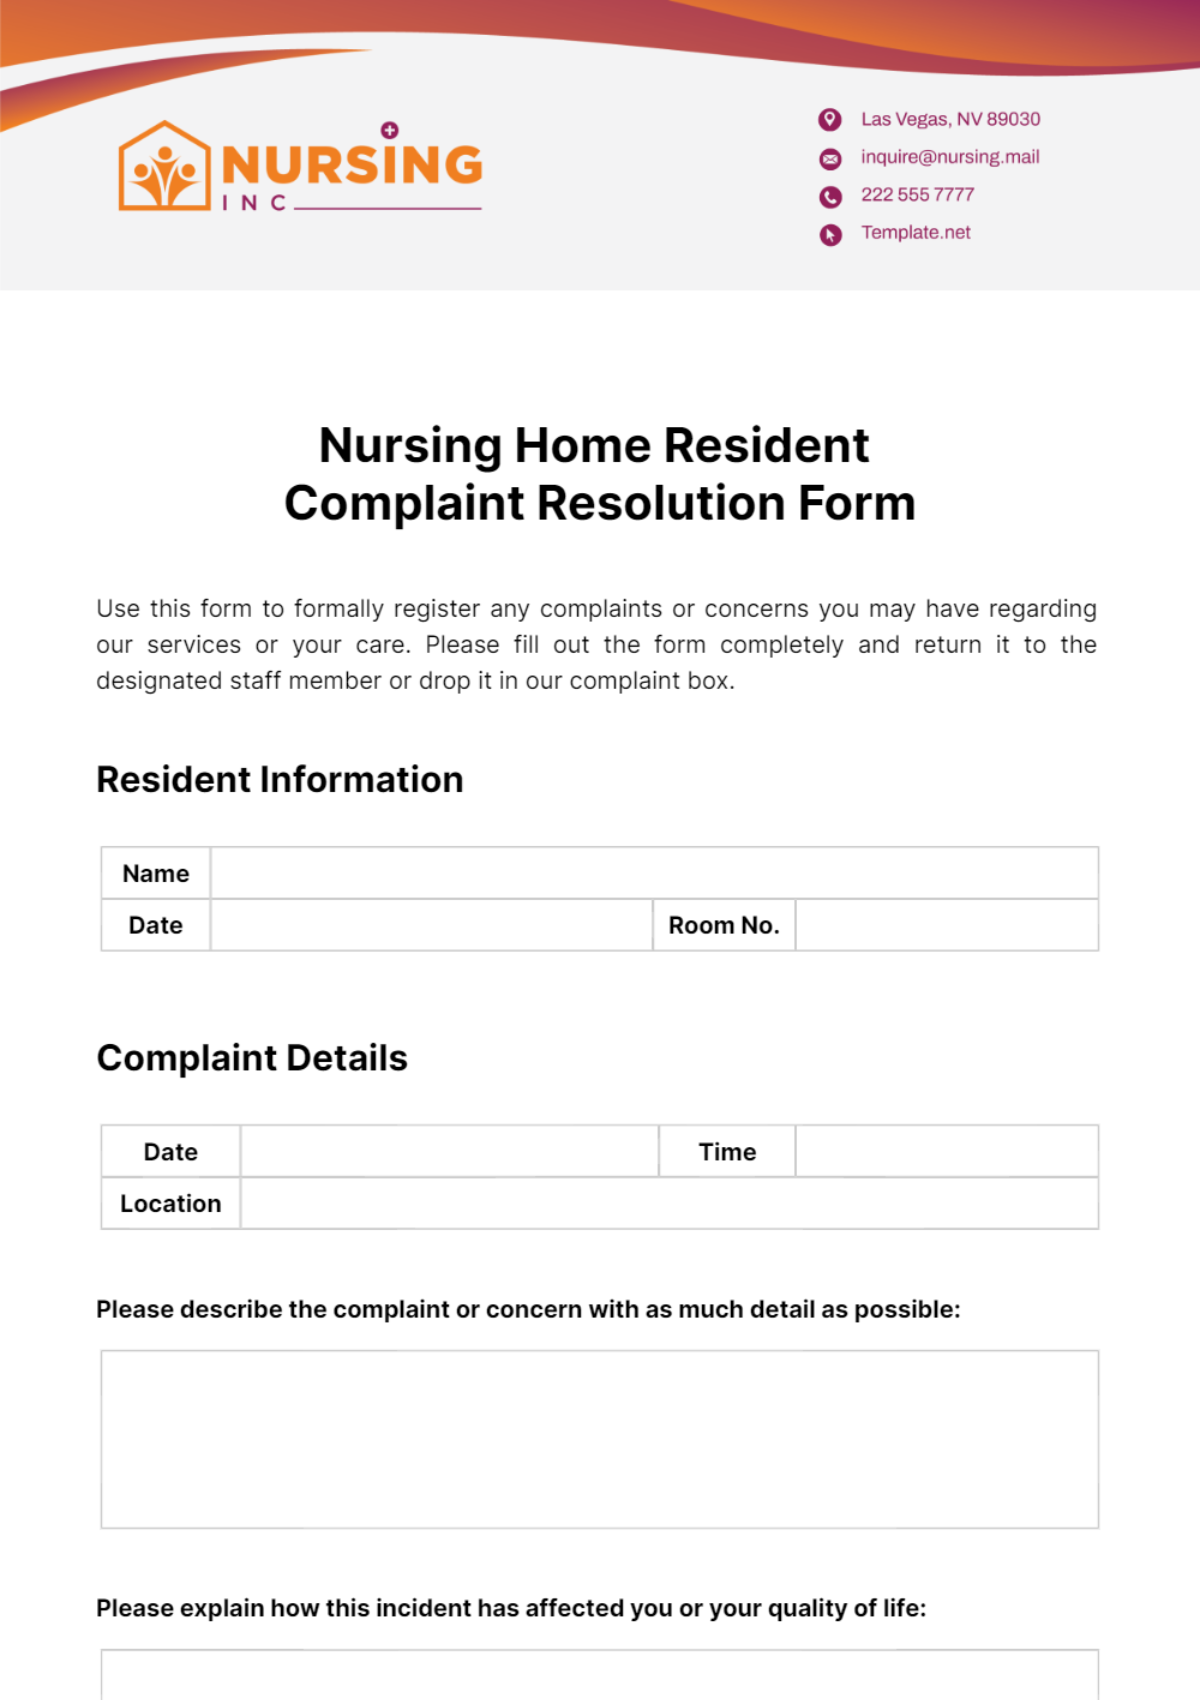 Nursing Home Resident Complaint Resolution Form Template